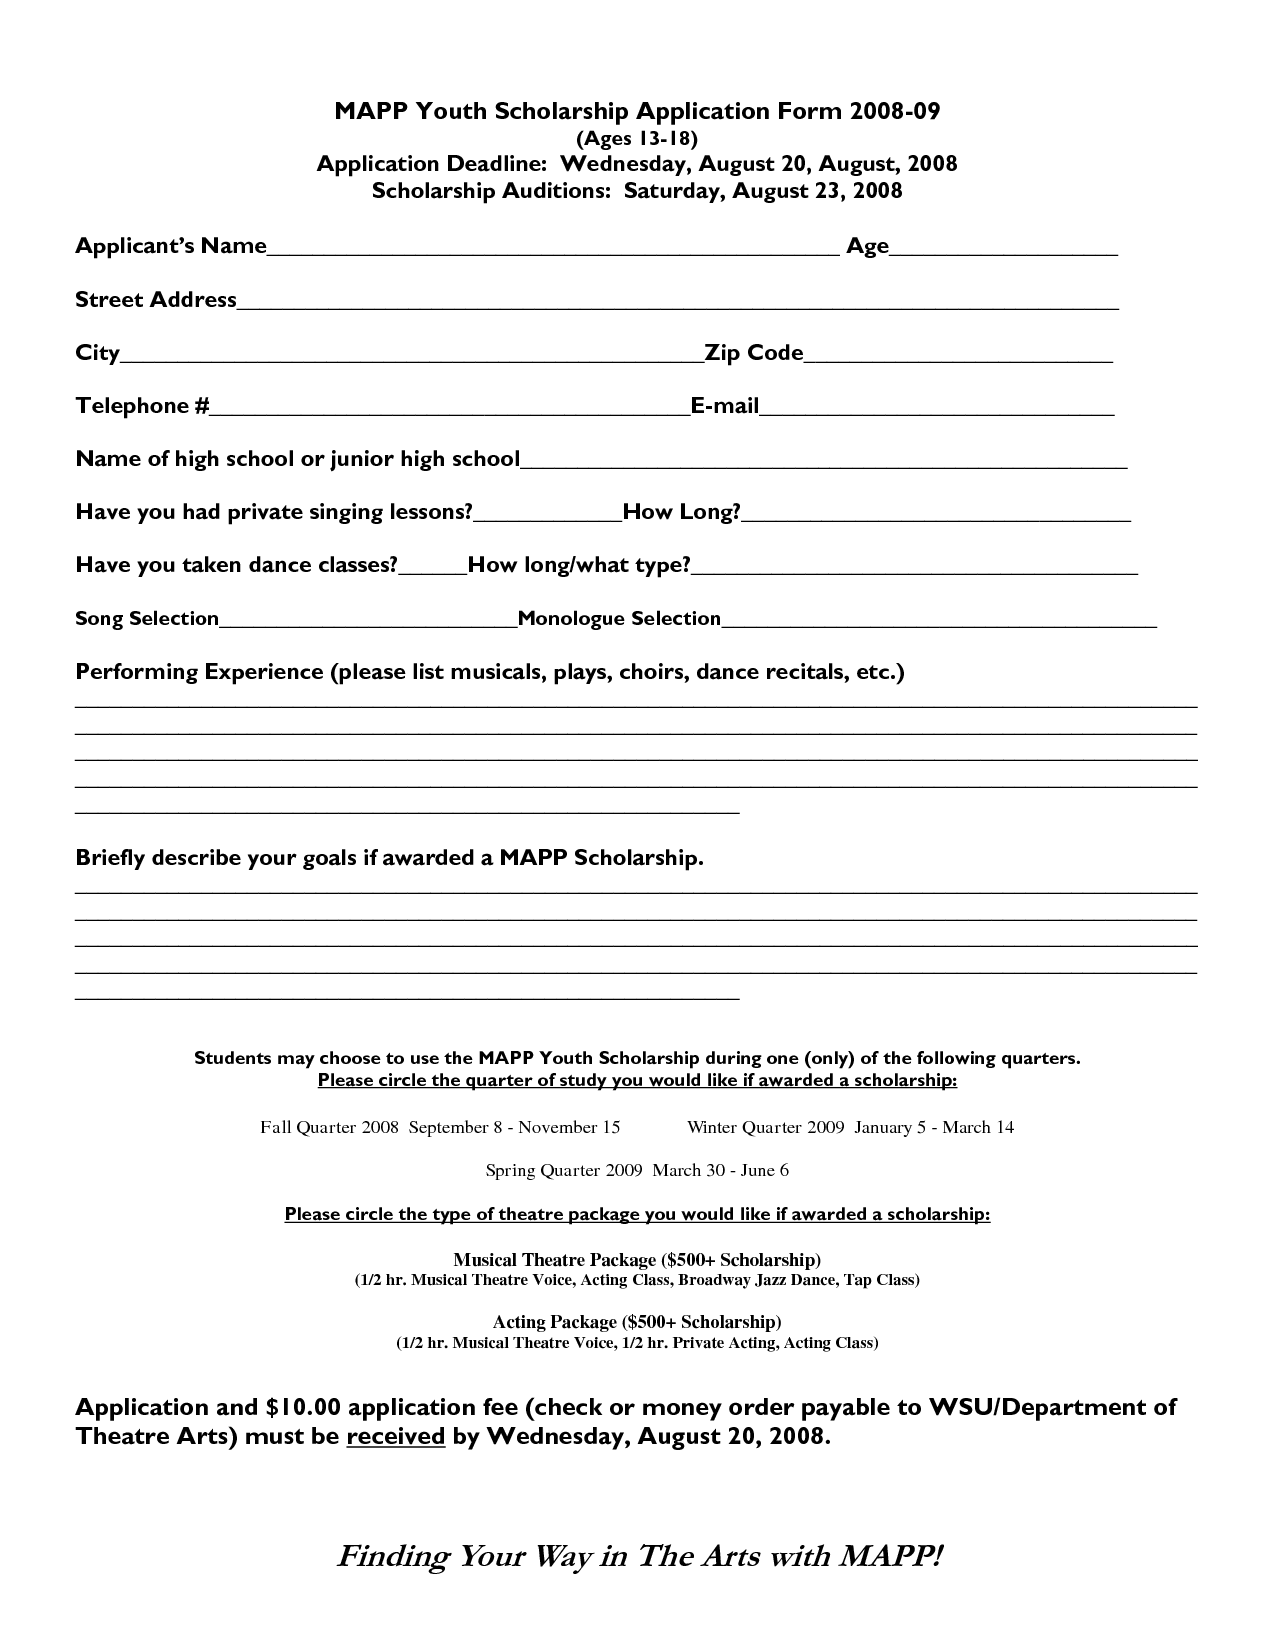 Sample Scholarship Application Form | amulette